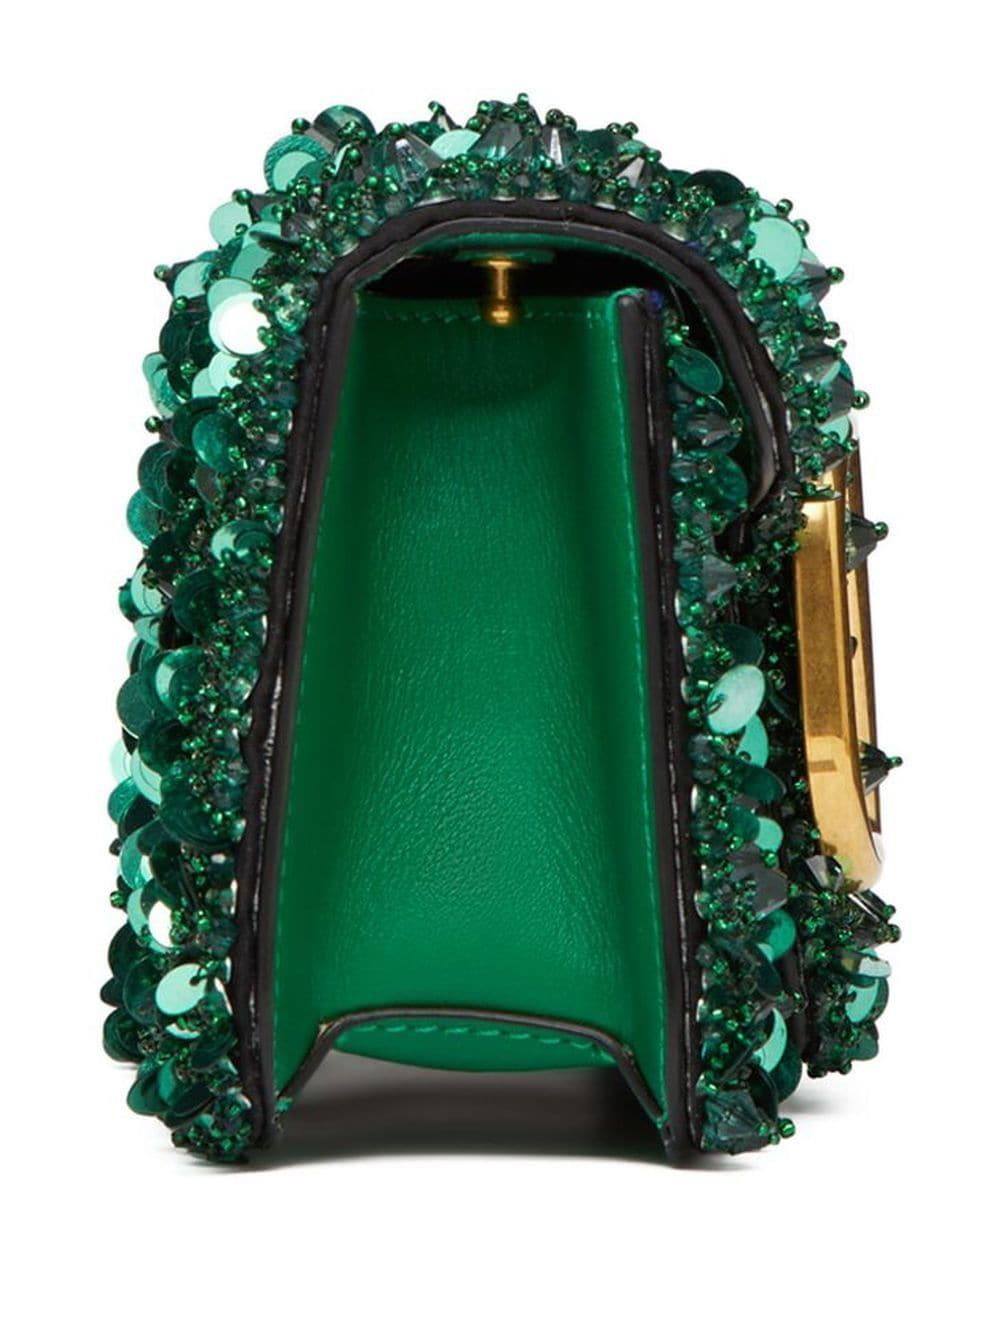 Loco Small Beaded Shoulder Bag in Green - Valentino Garavani